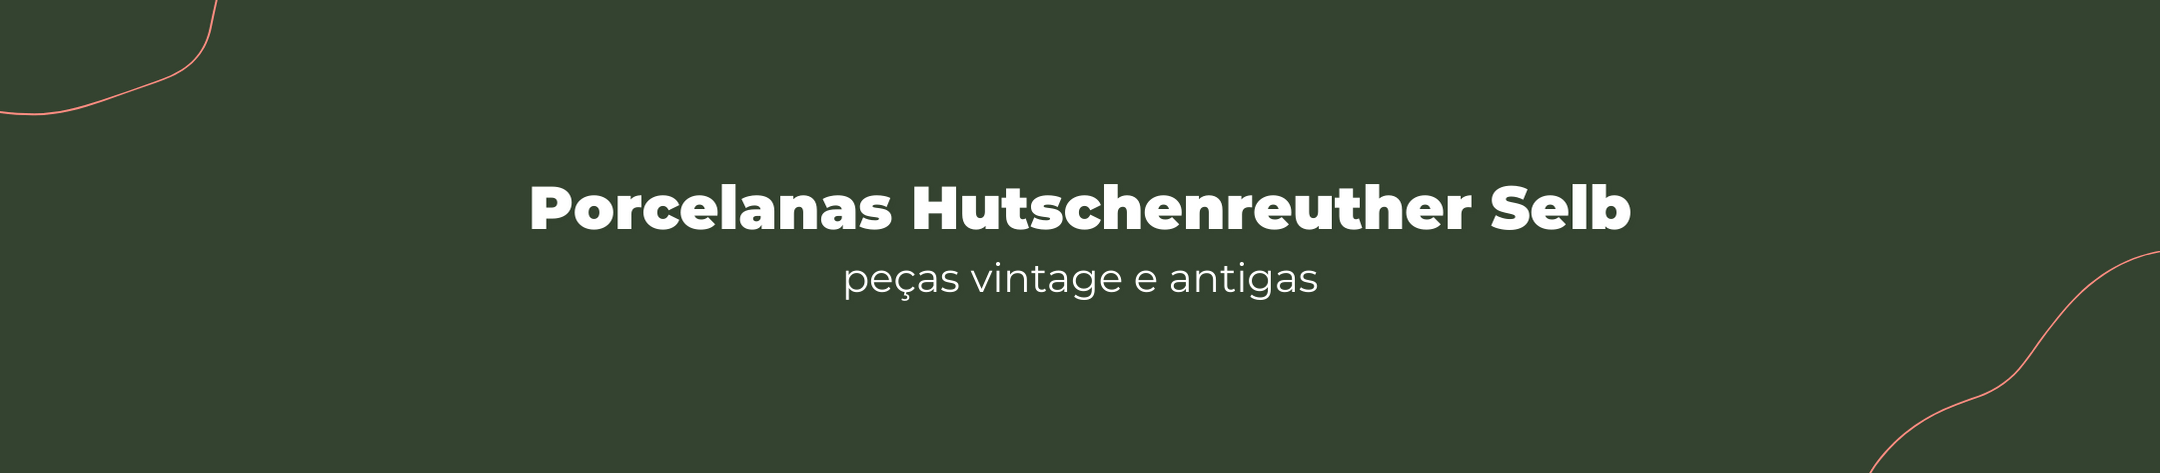 Porcelanas Hutschenreuther Selb Antigas e Vintage